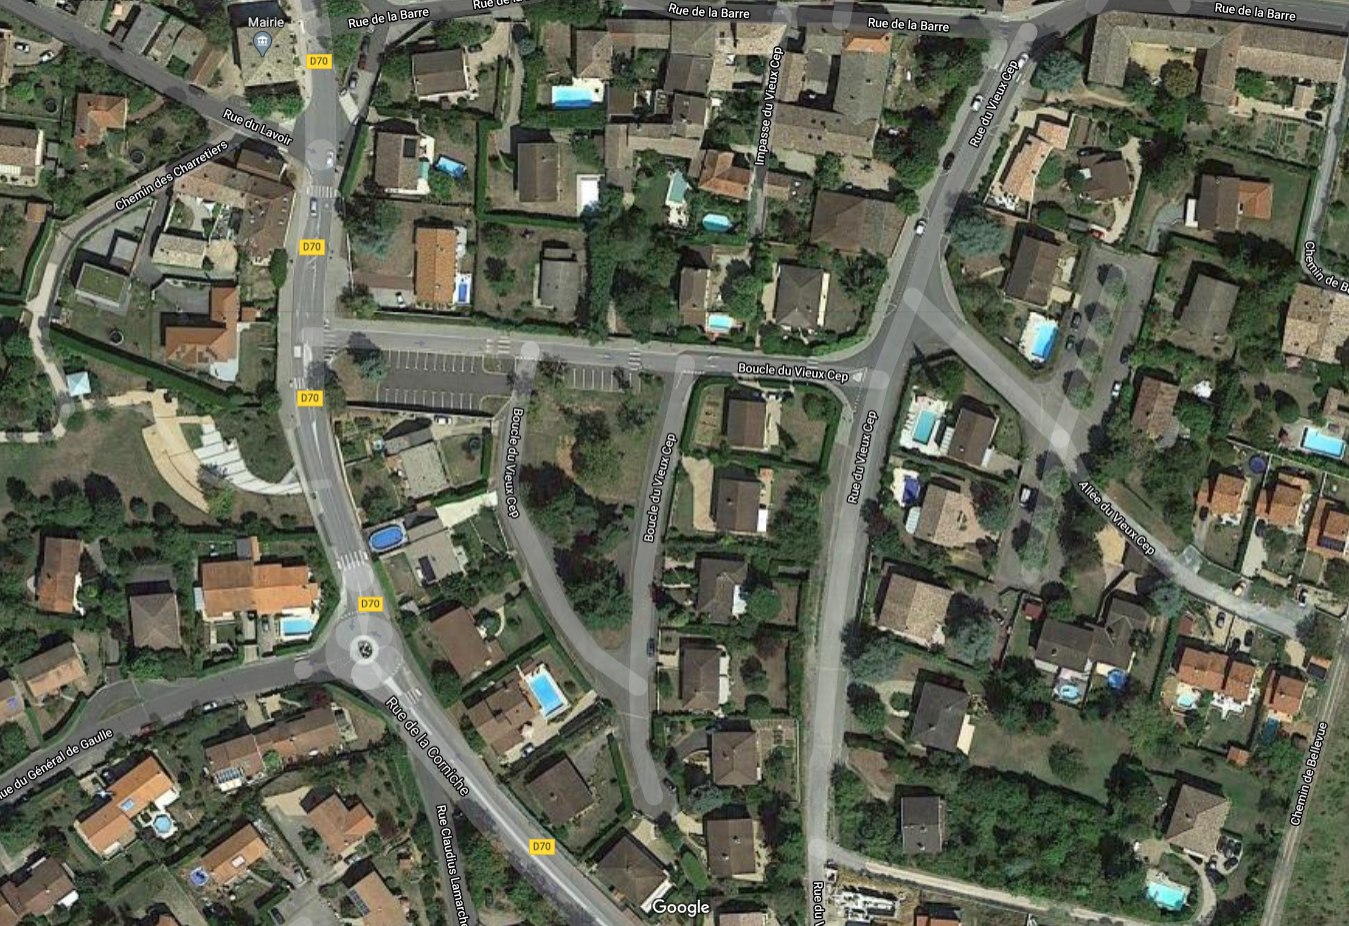 Logement - photo satellite.jpg